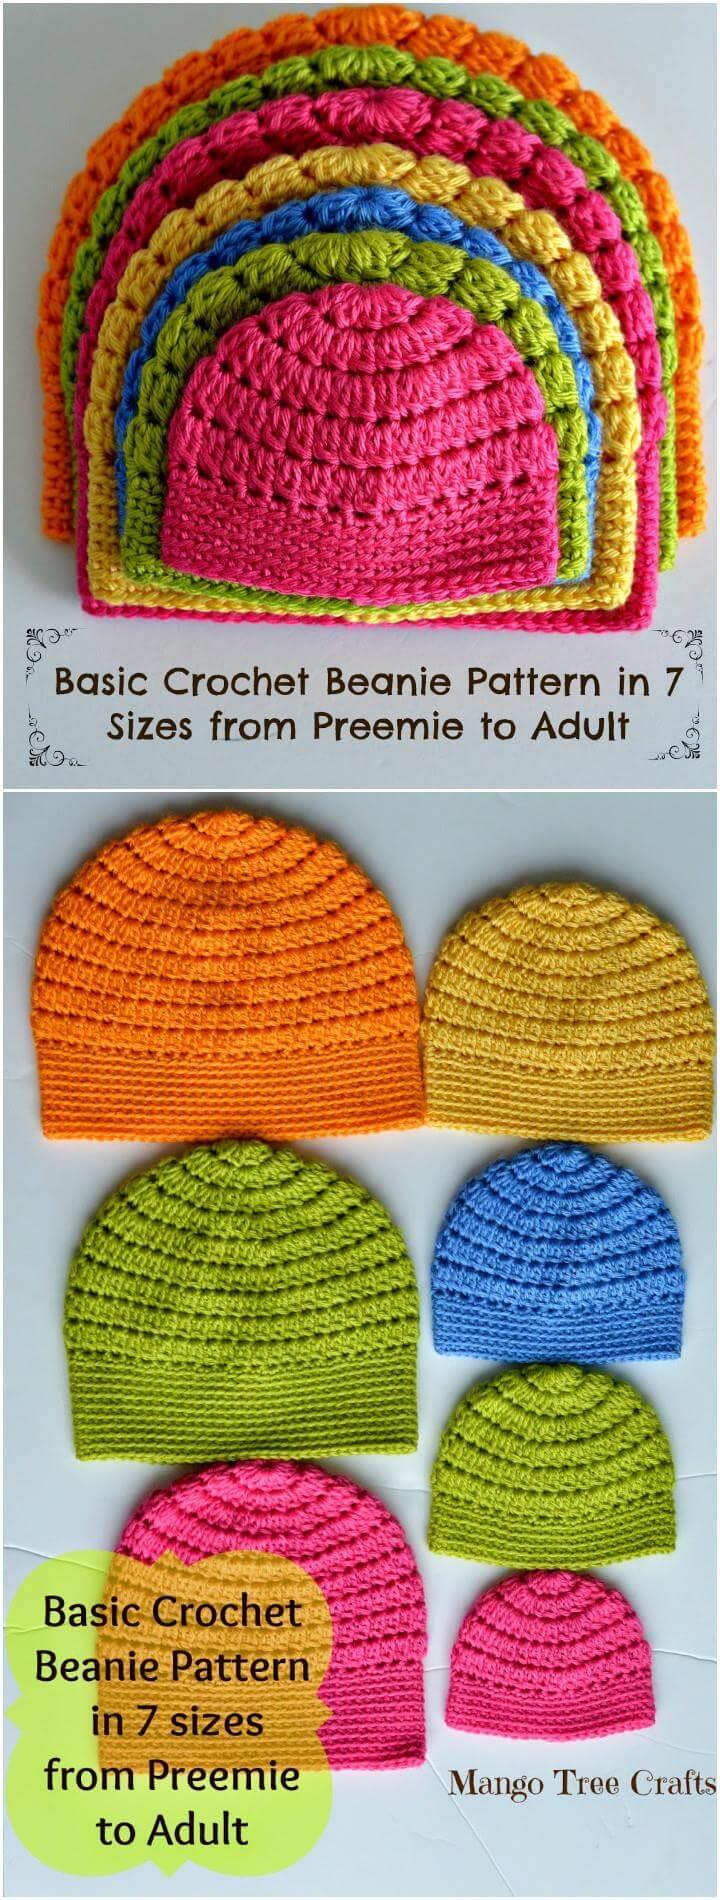 mango tree crafts crochet hat sizes